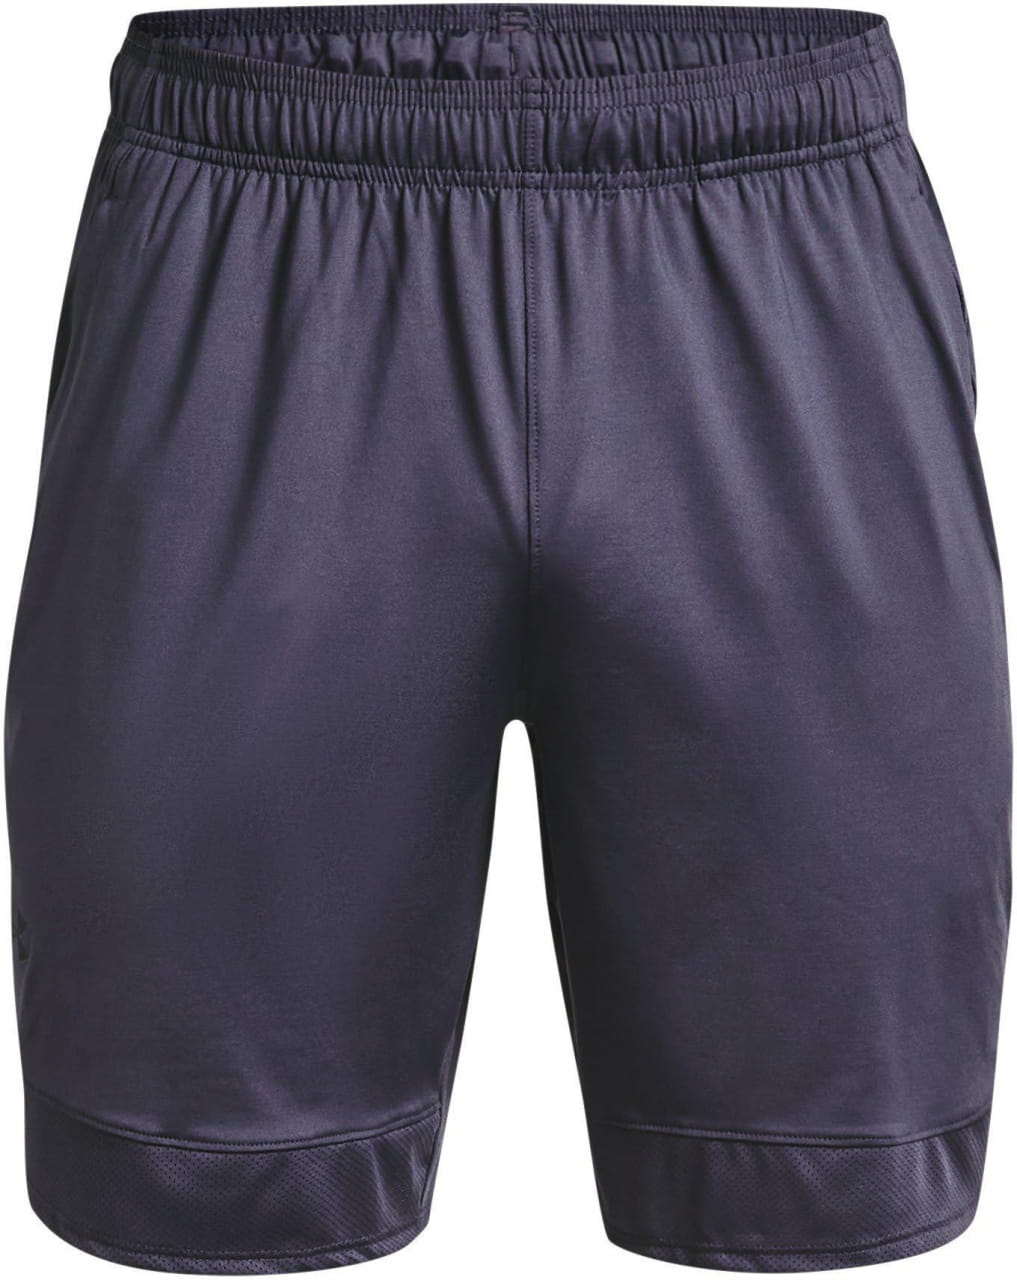 Moške športne hlače Under Armour Train Stretch Shorts-GRY